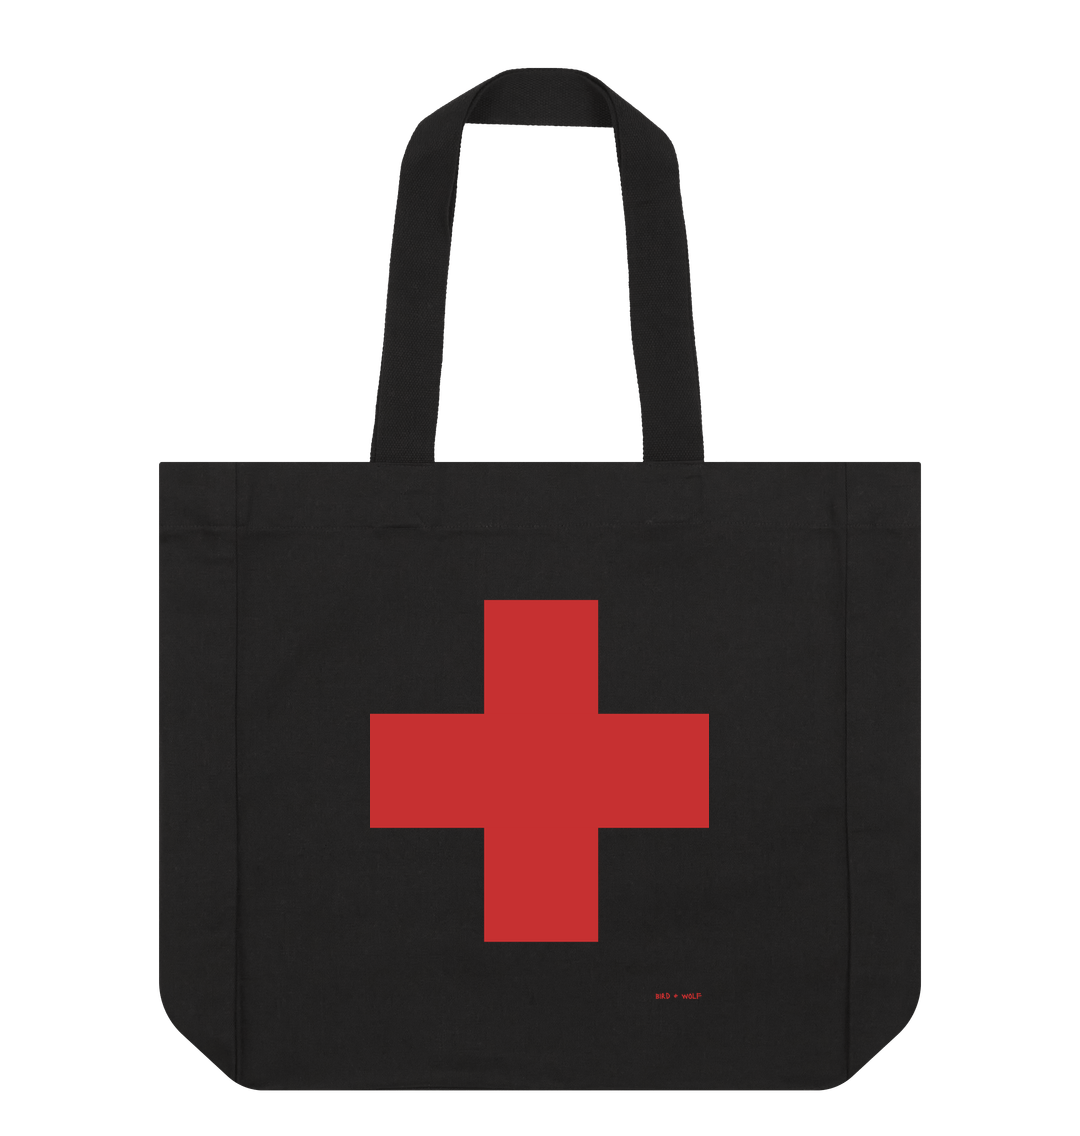 Black Red Cross Everything Bag